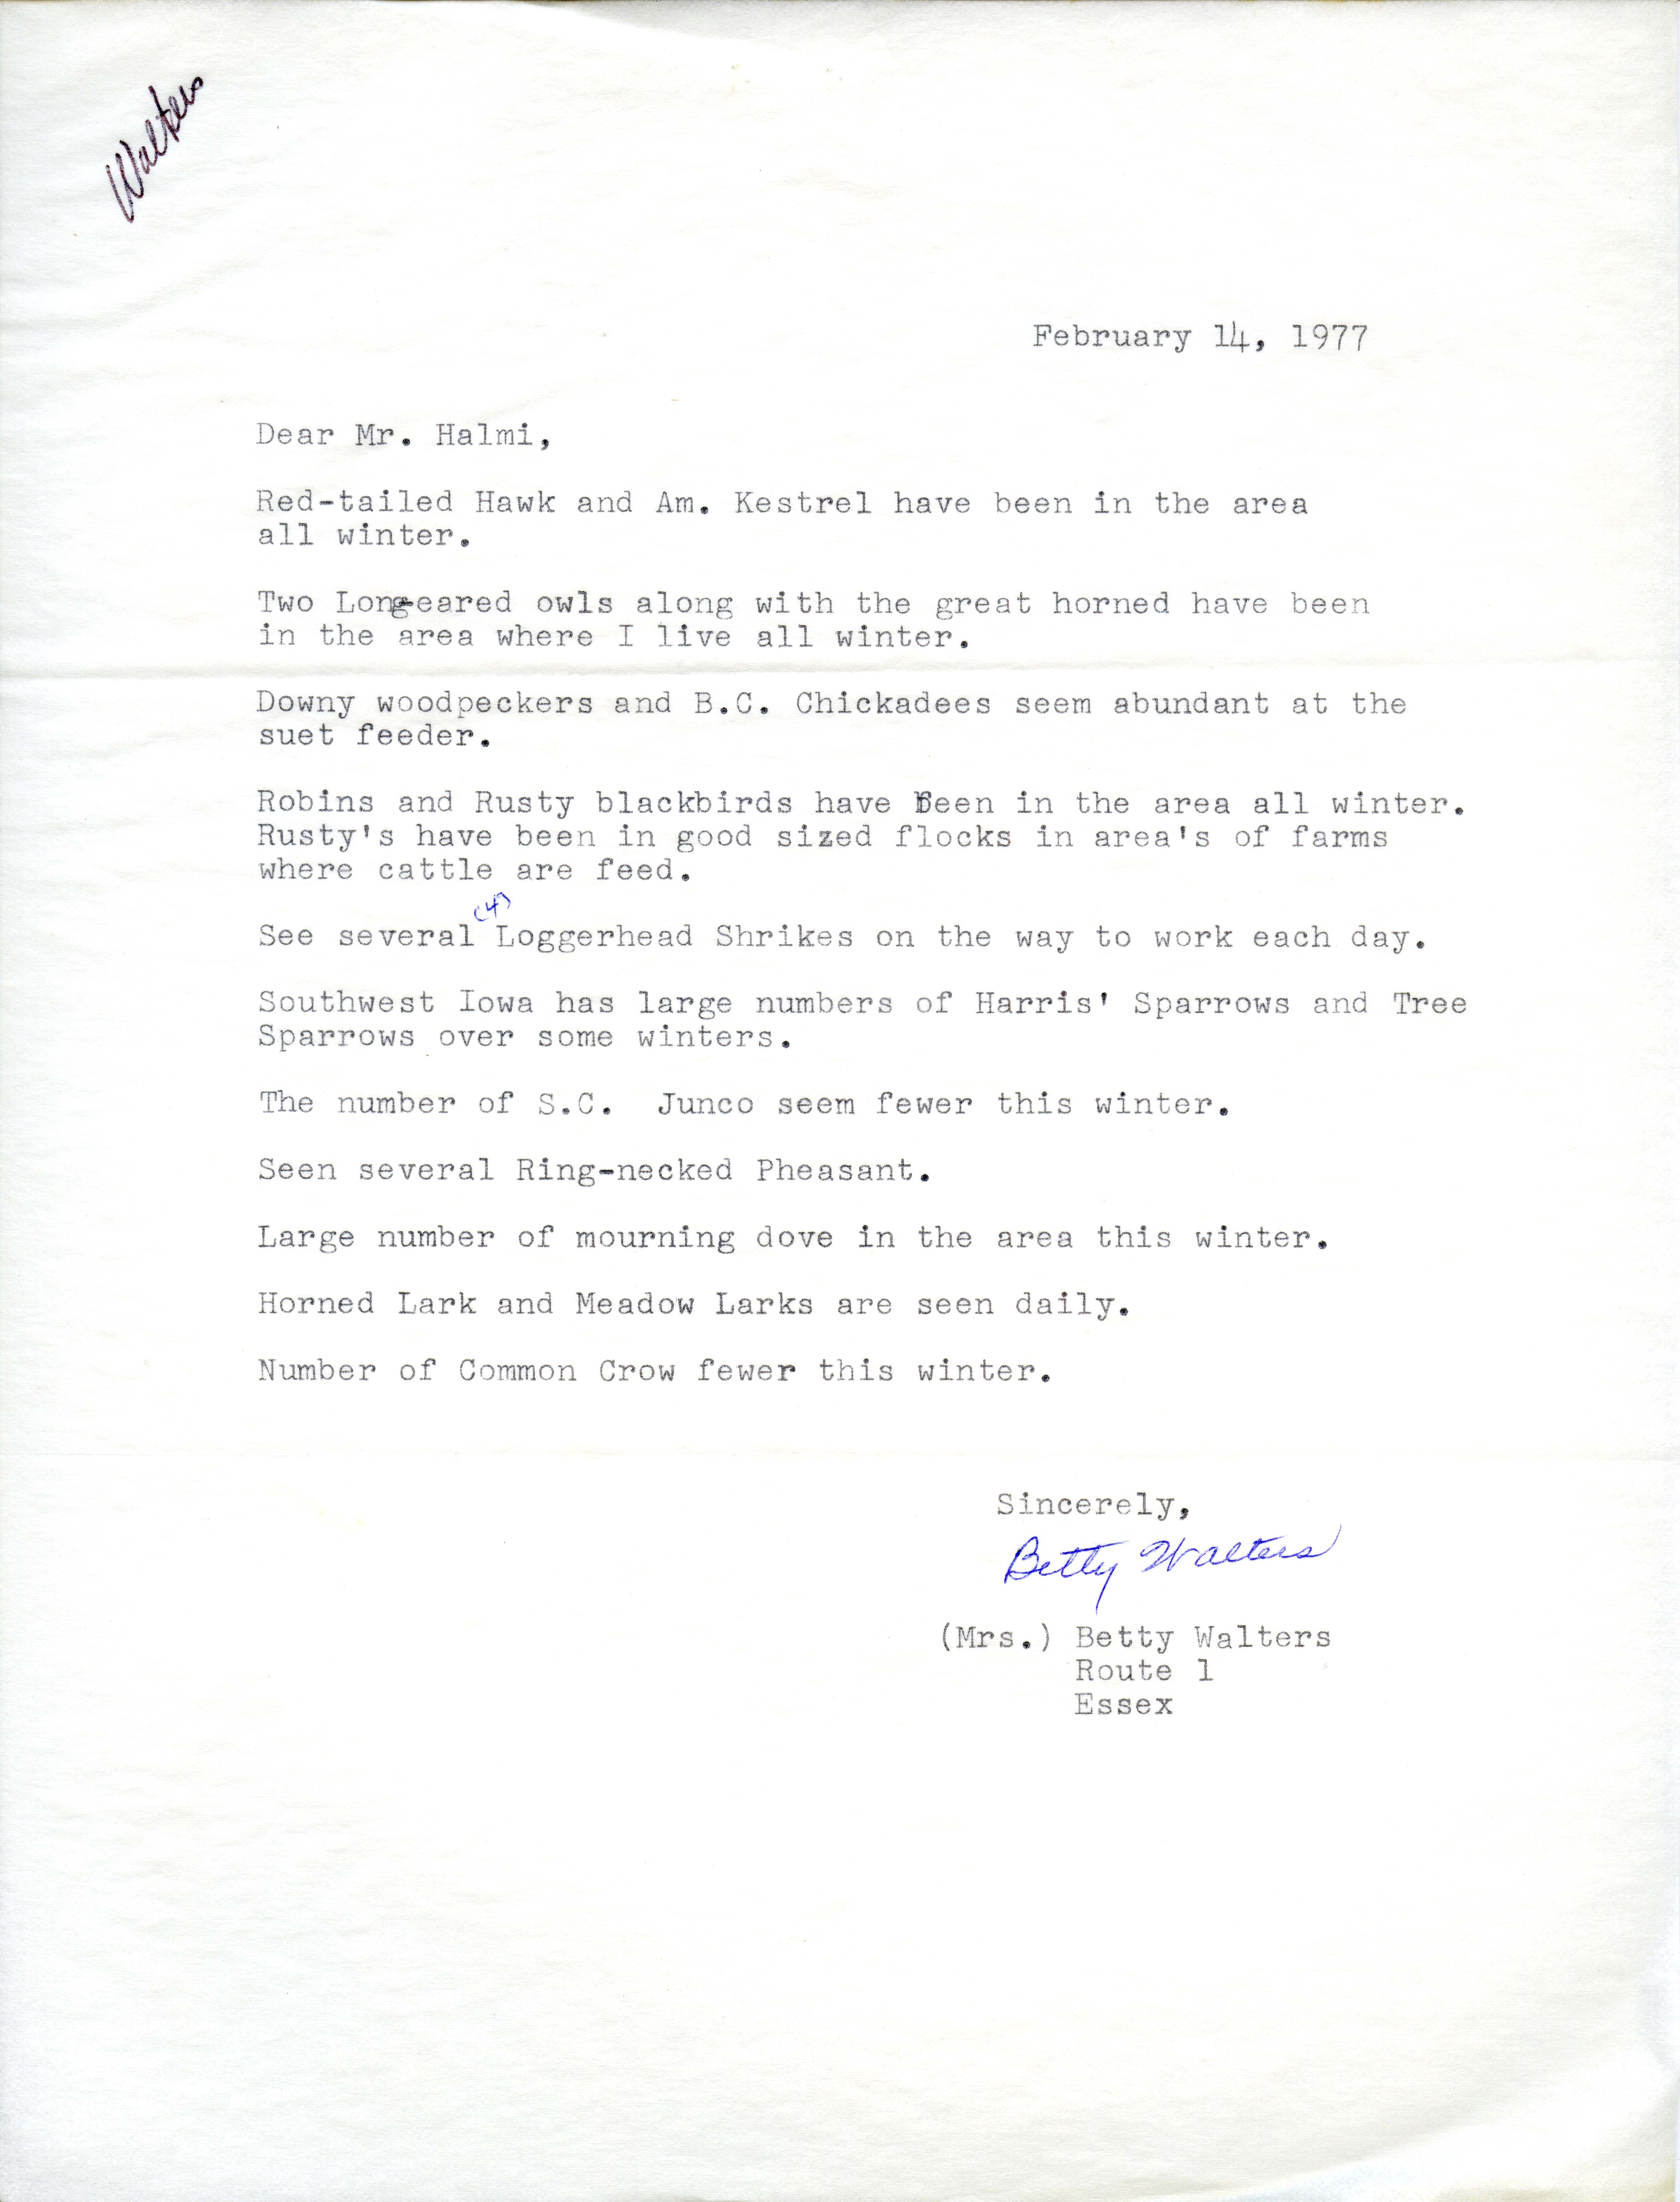 Betty Walters letter to Nicholas S. Halmi regarding bird sightings, February 14, 1977